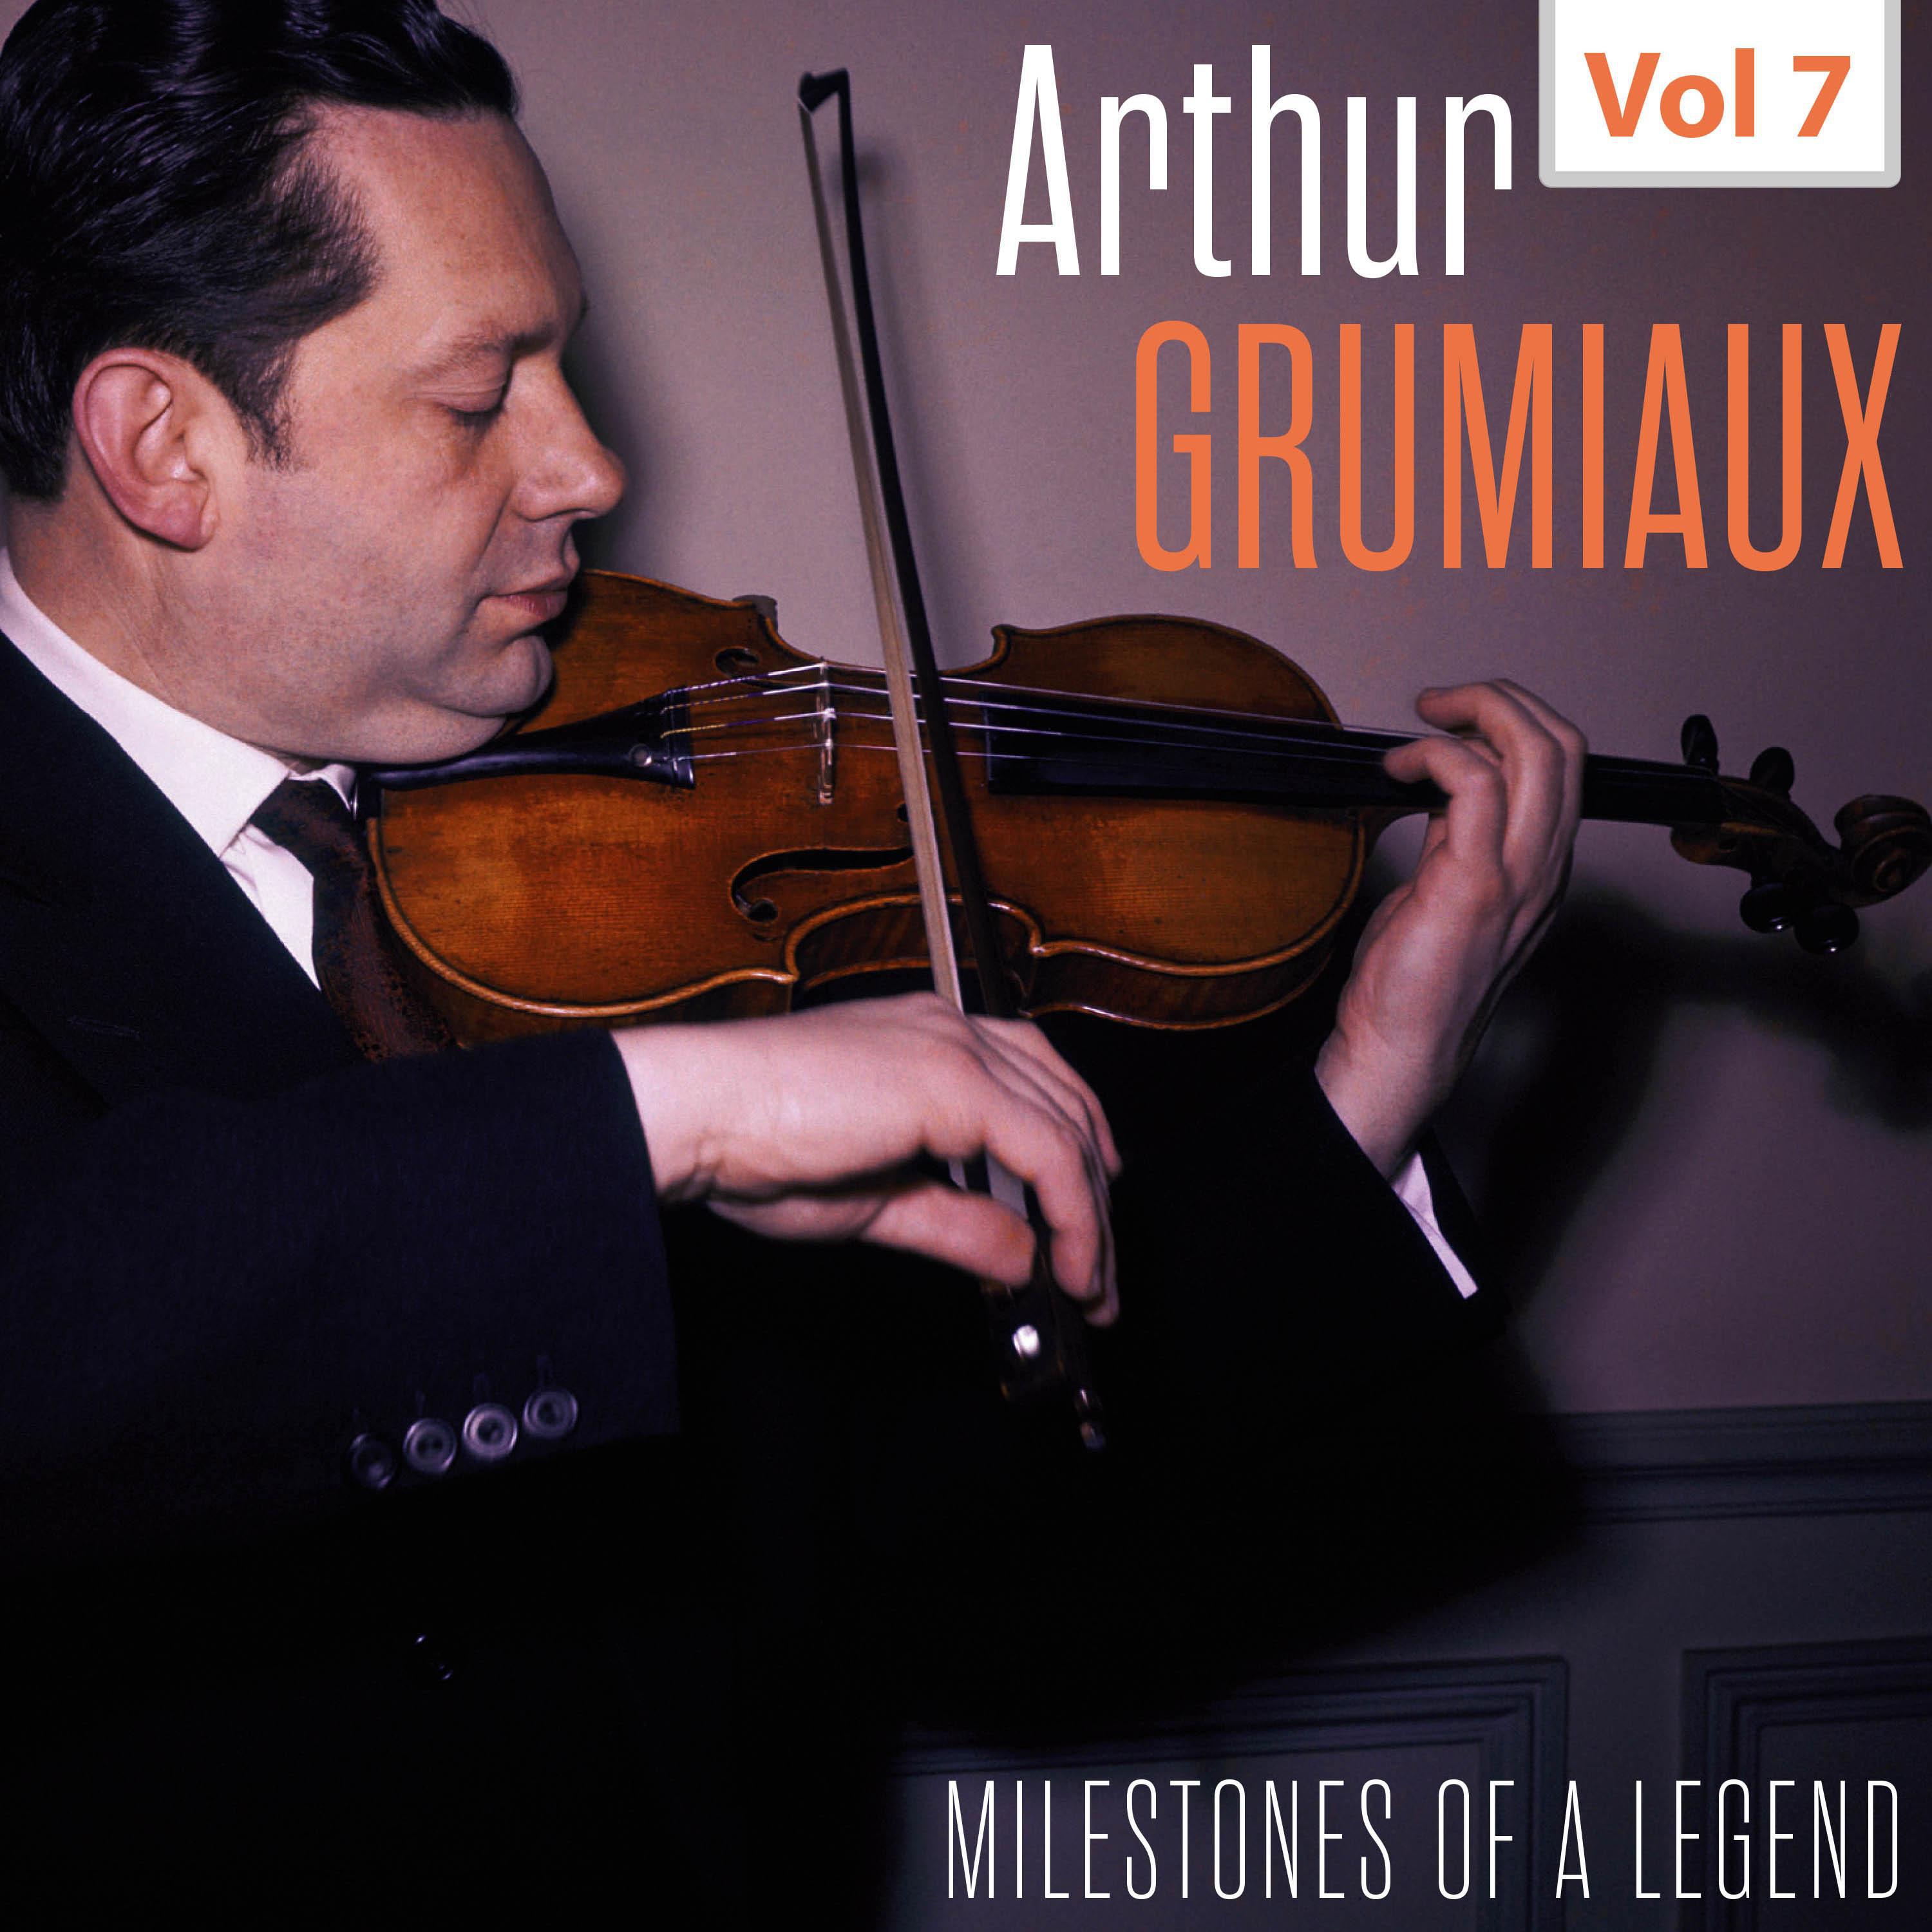 Milestones of a Legend - Arthur Grumiaux, Vol. 7专辑